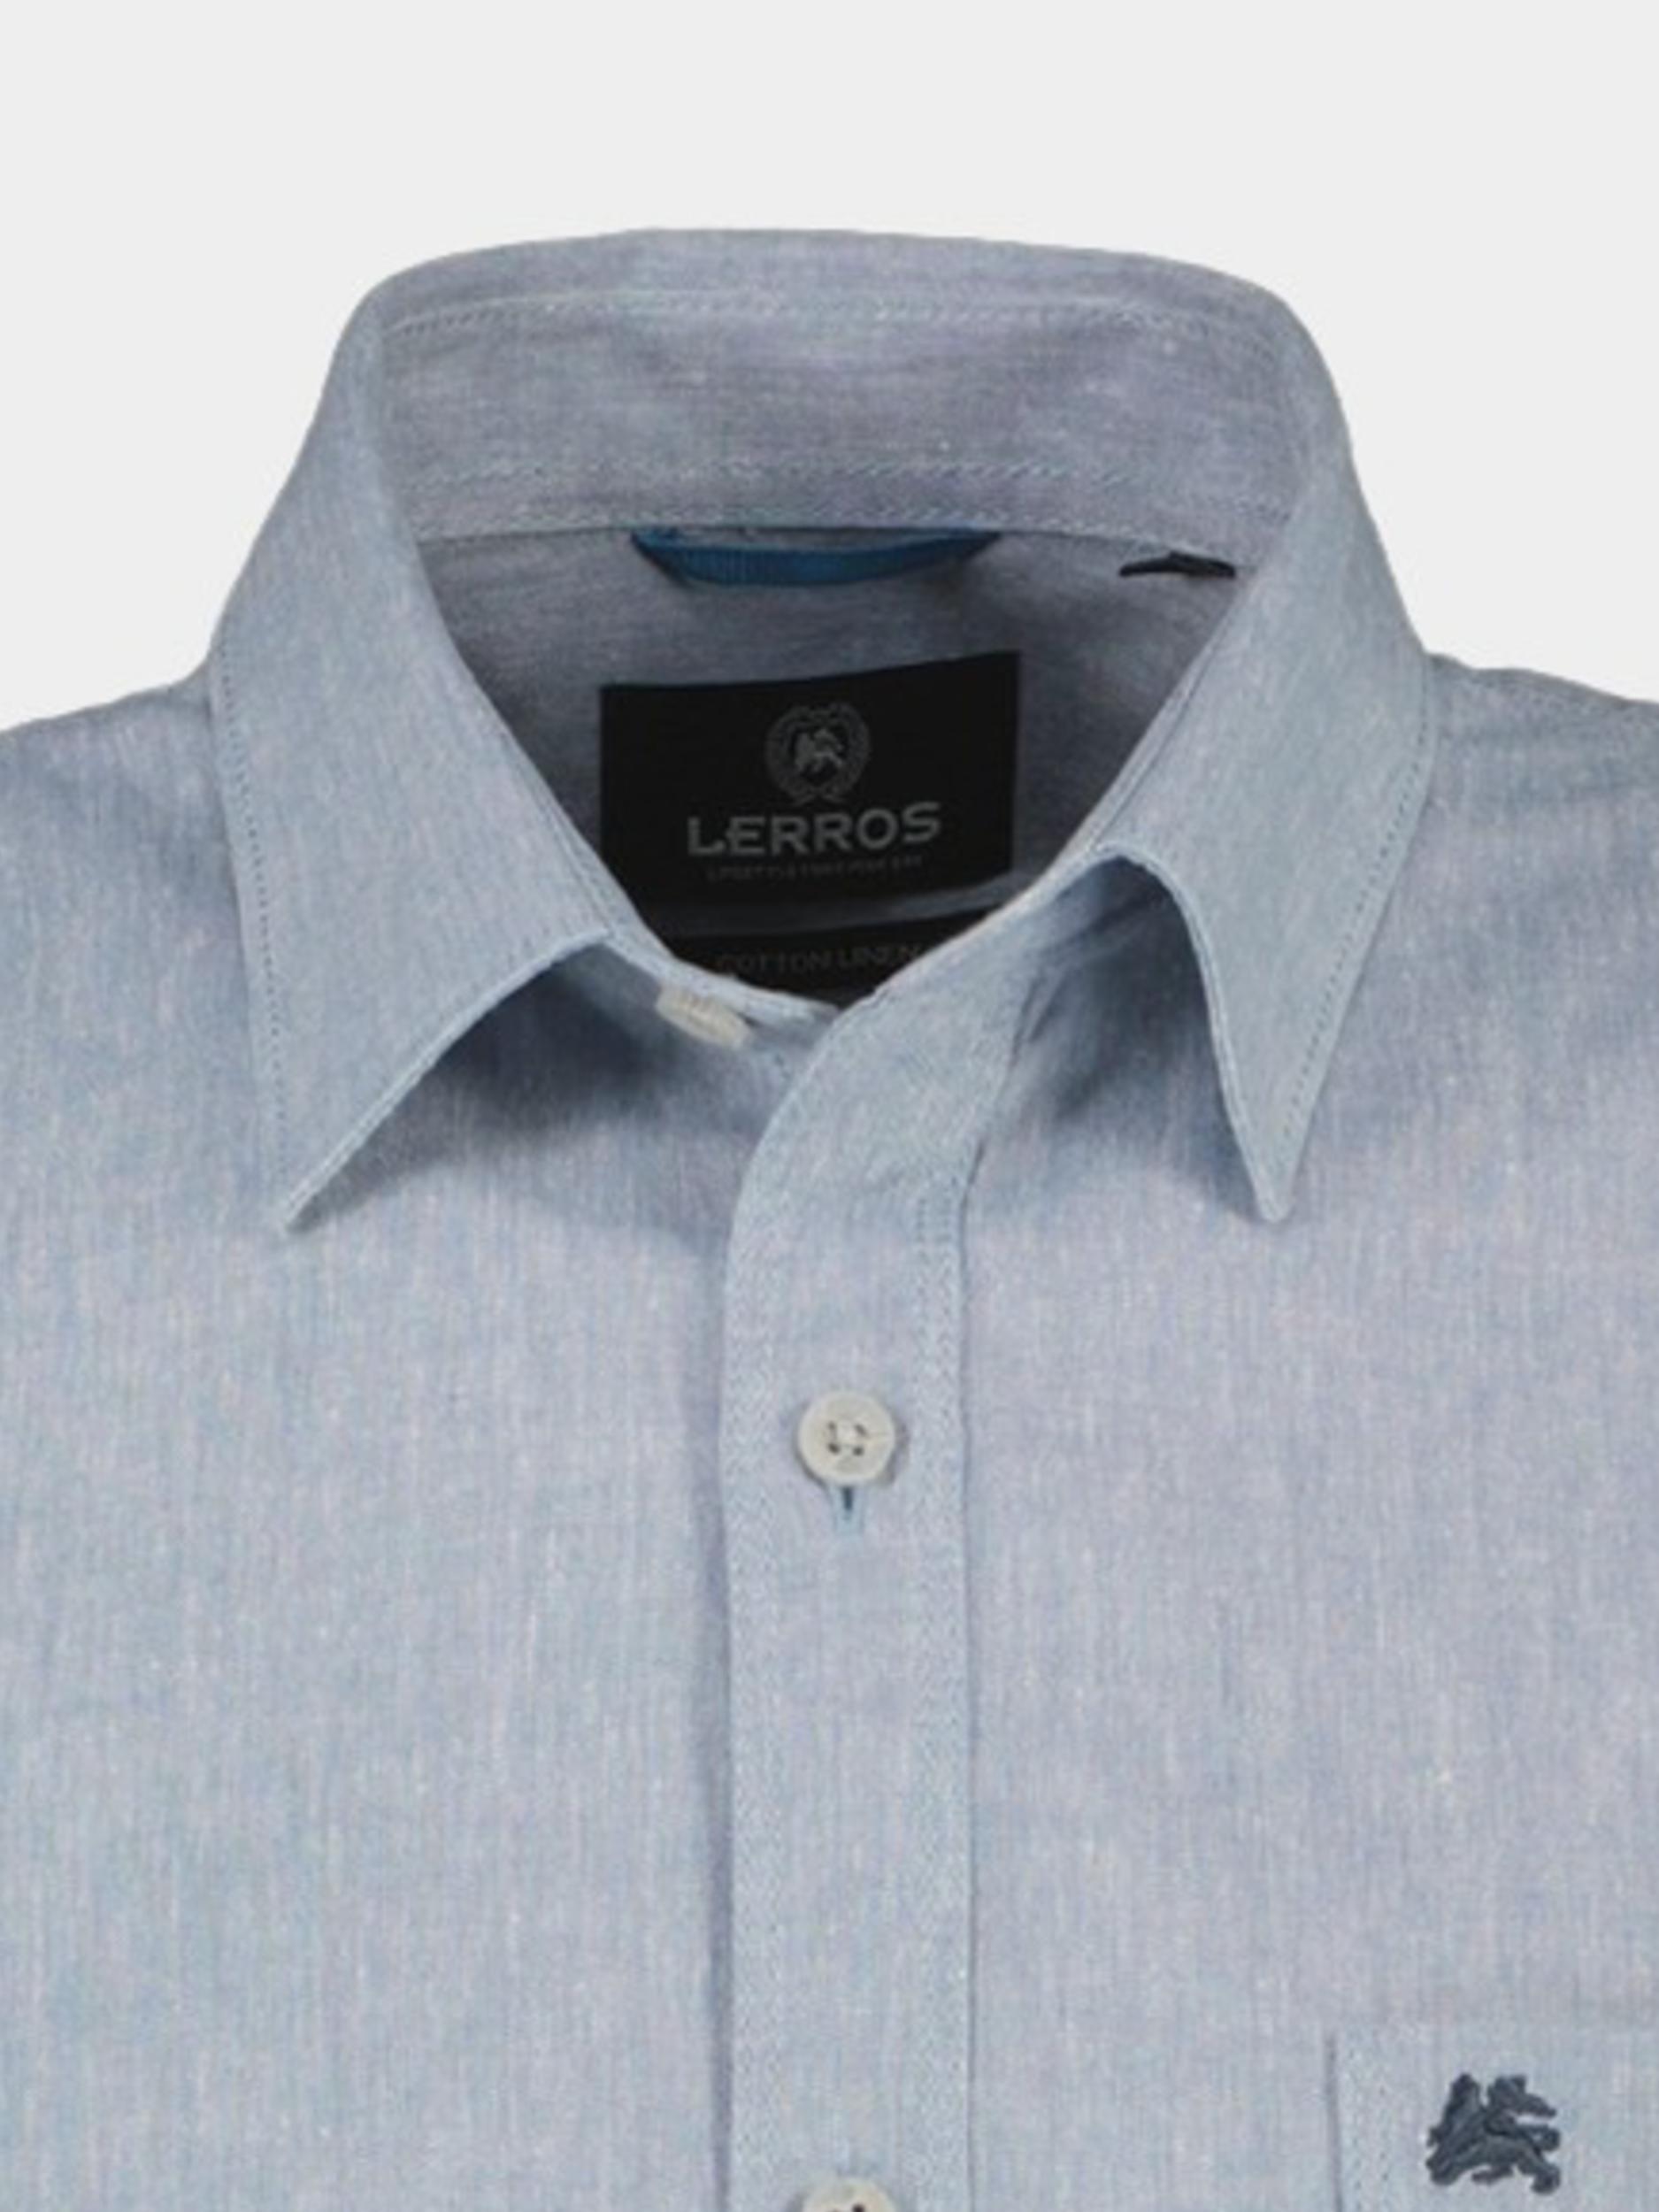 Lerros Casual hemd korte mouw Blauw HEMD 1/2 ARM 2442010/440 MID STORM BLUE